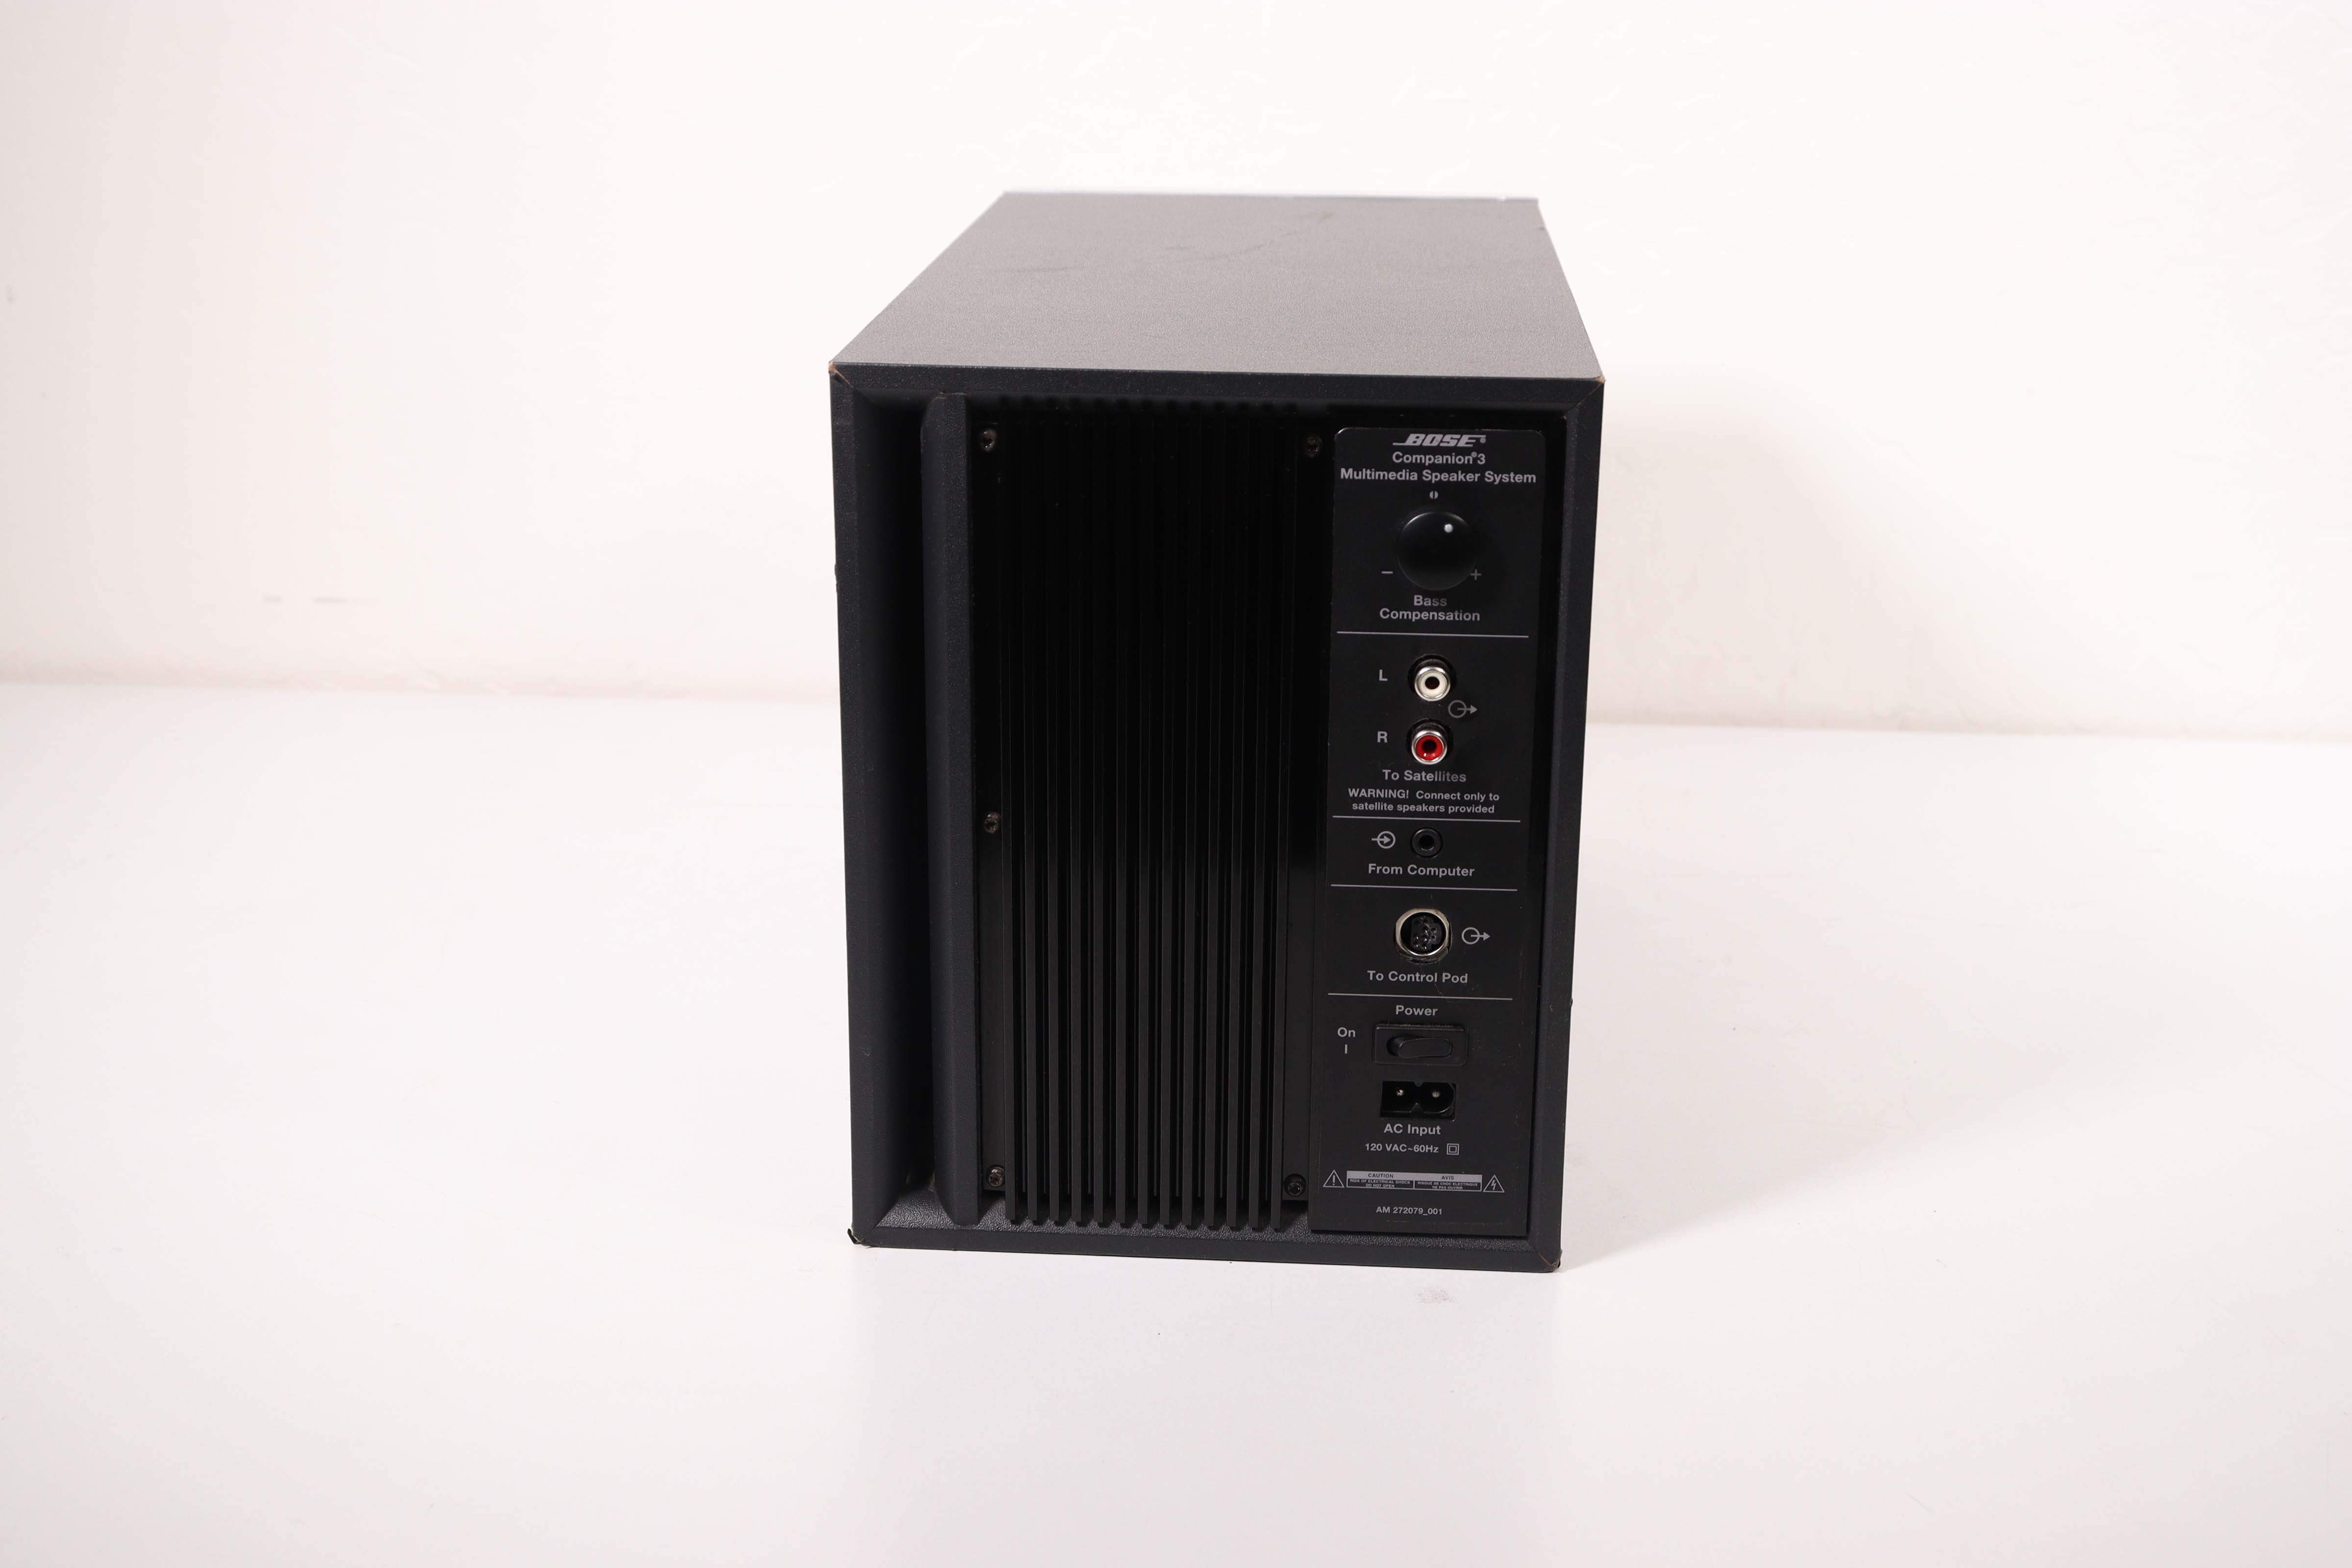 Bose speaker companion 2 series III (3) great condition - computer